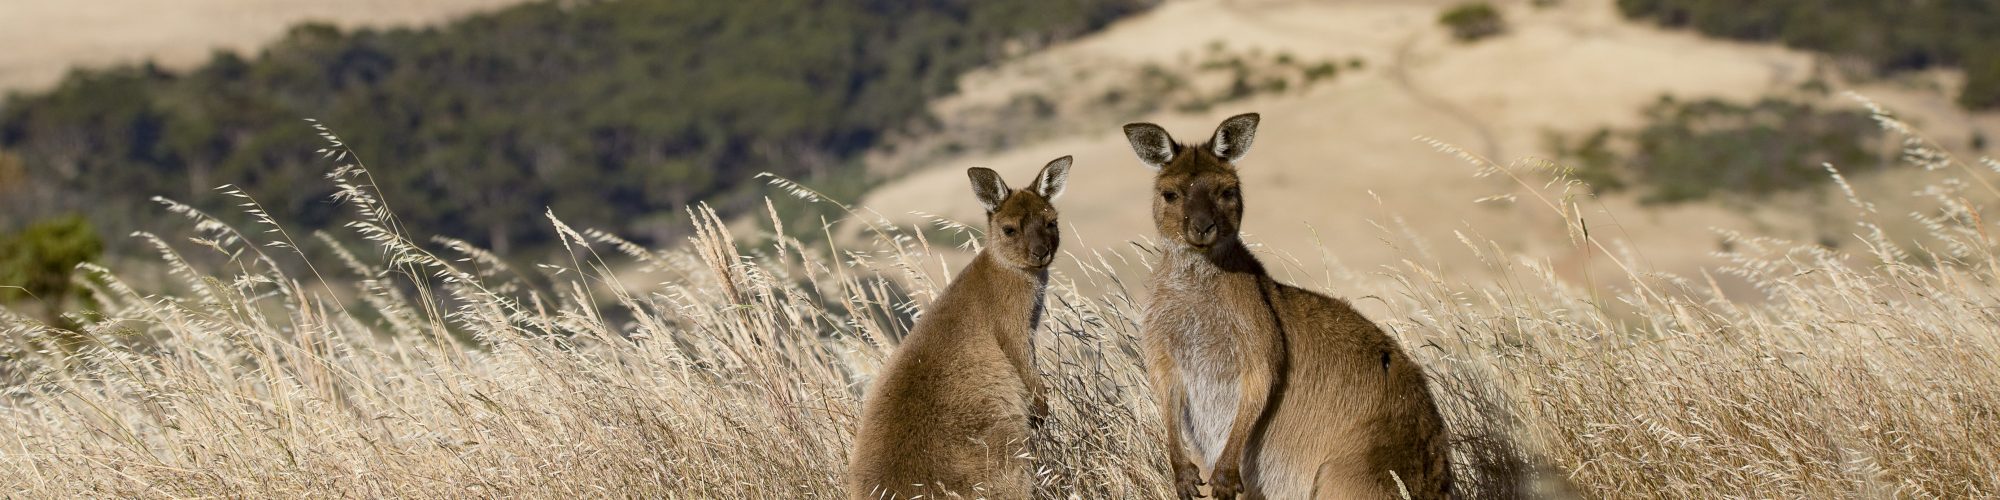 Credit: Exceptional Kangaroo Island, South Australia